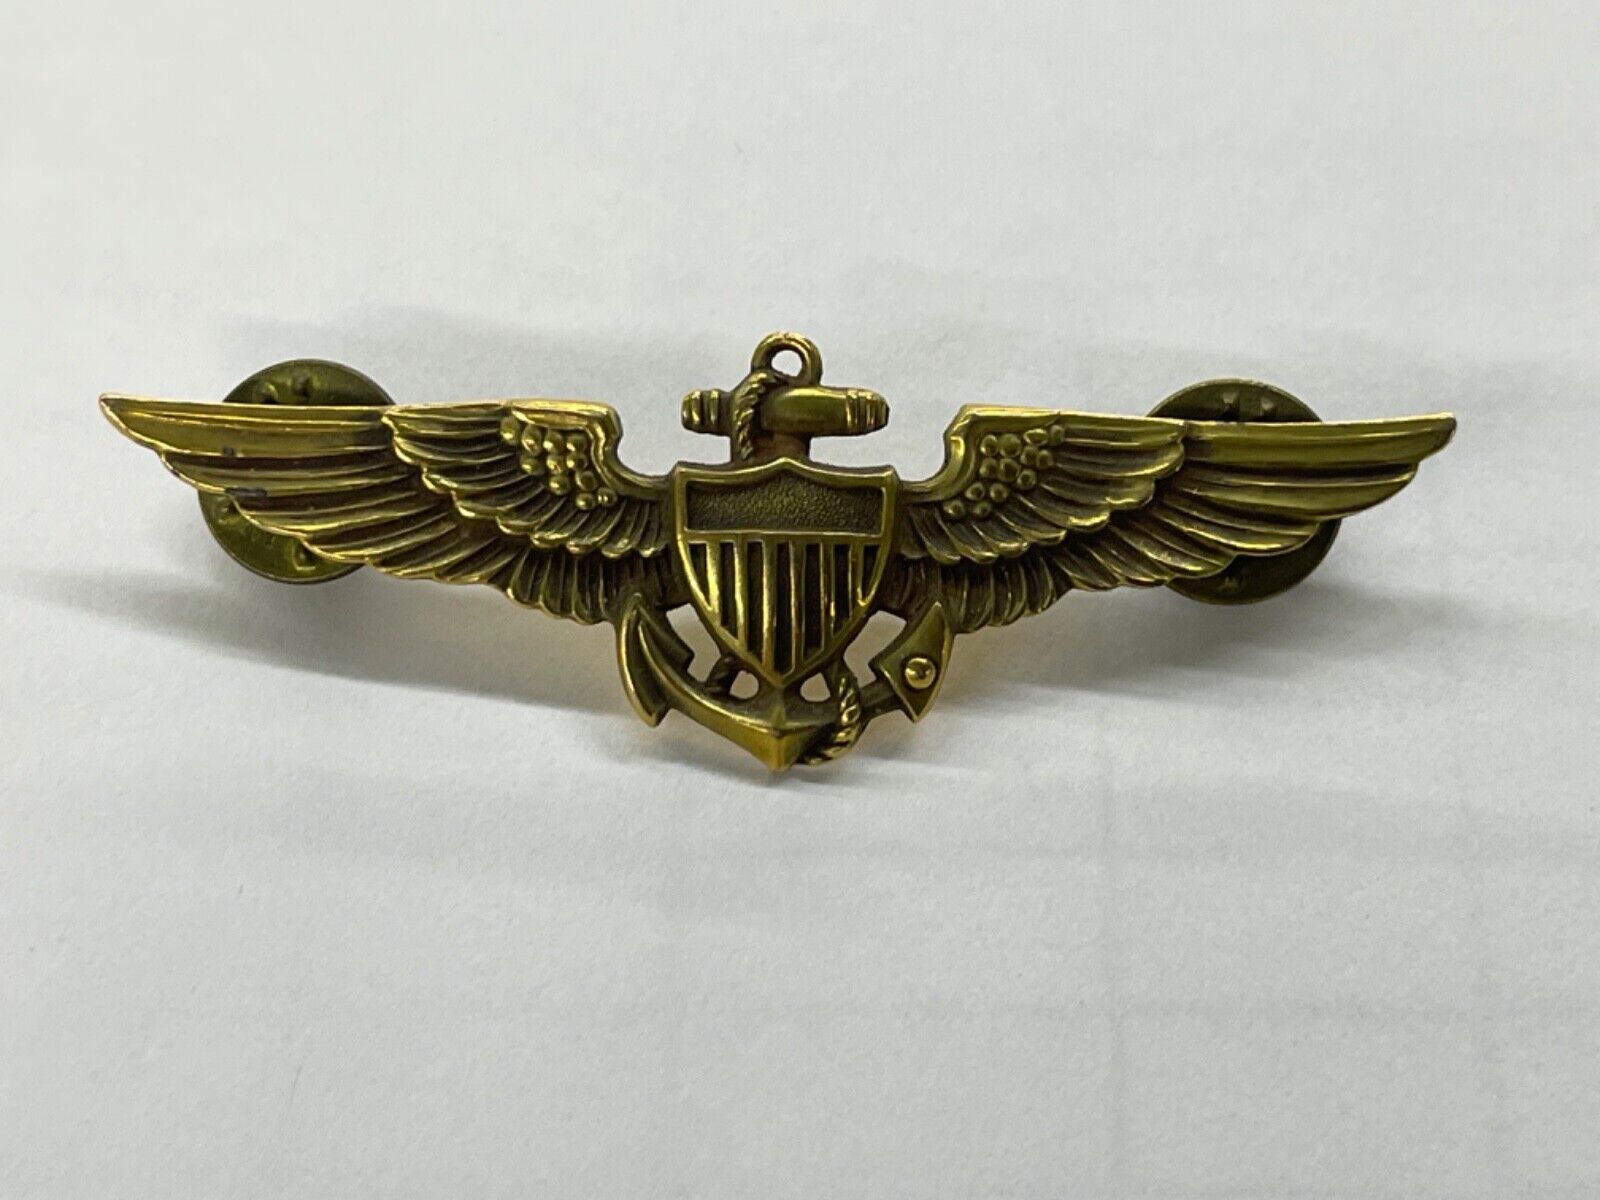 US Naval Aviator Pilot Wings Balfour LGB 1/20th 10K Gold Filled